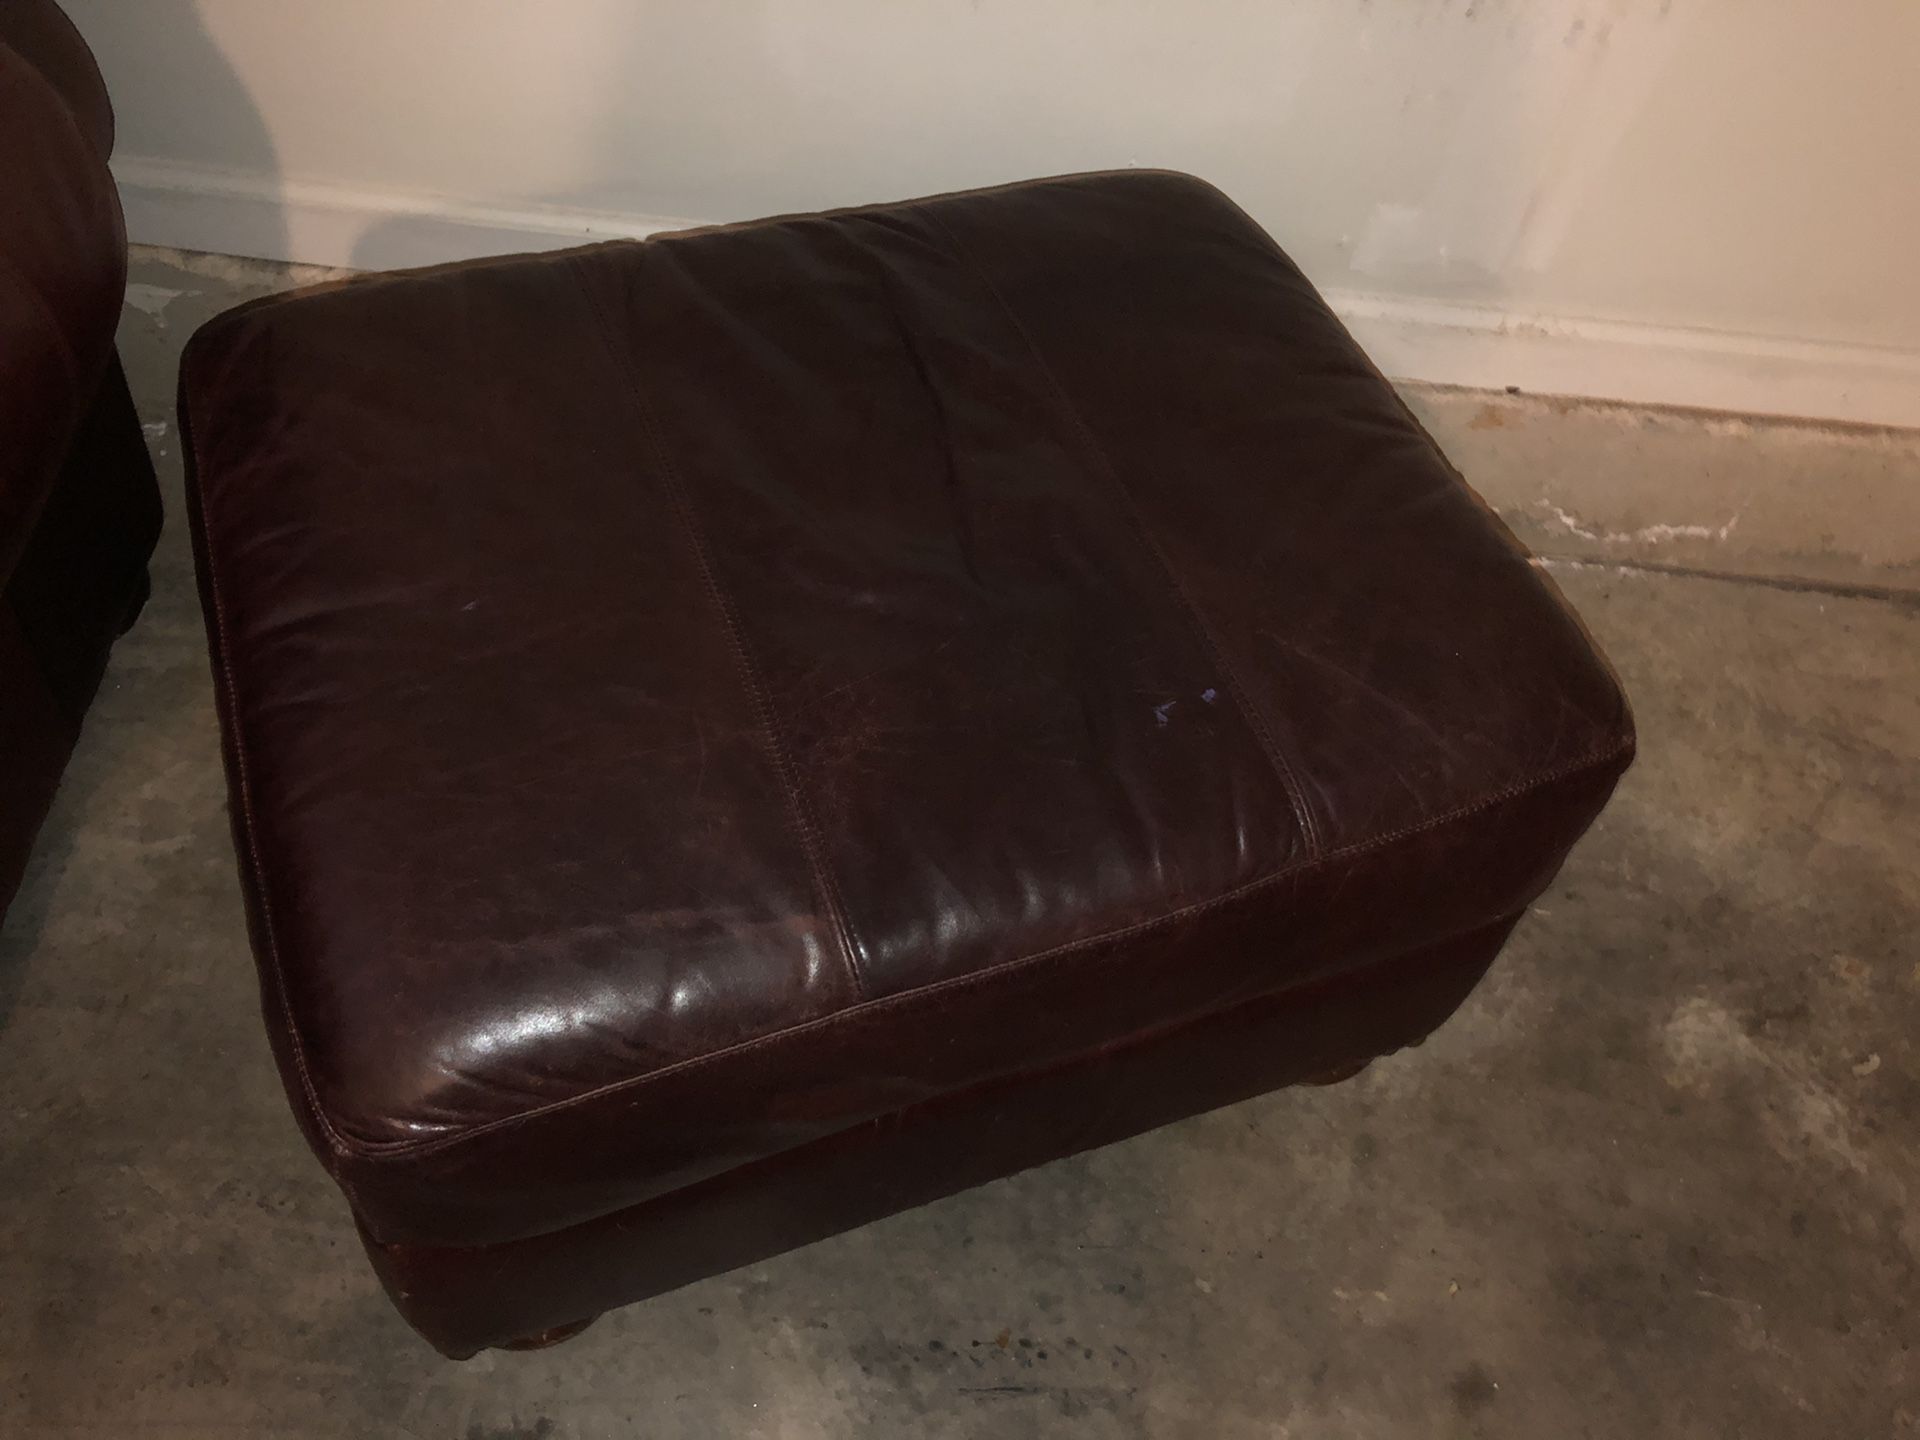 Burgundy sofa set $250 !!